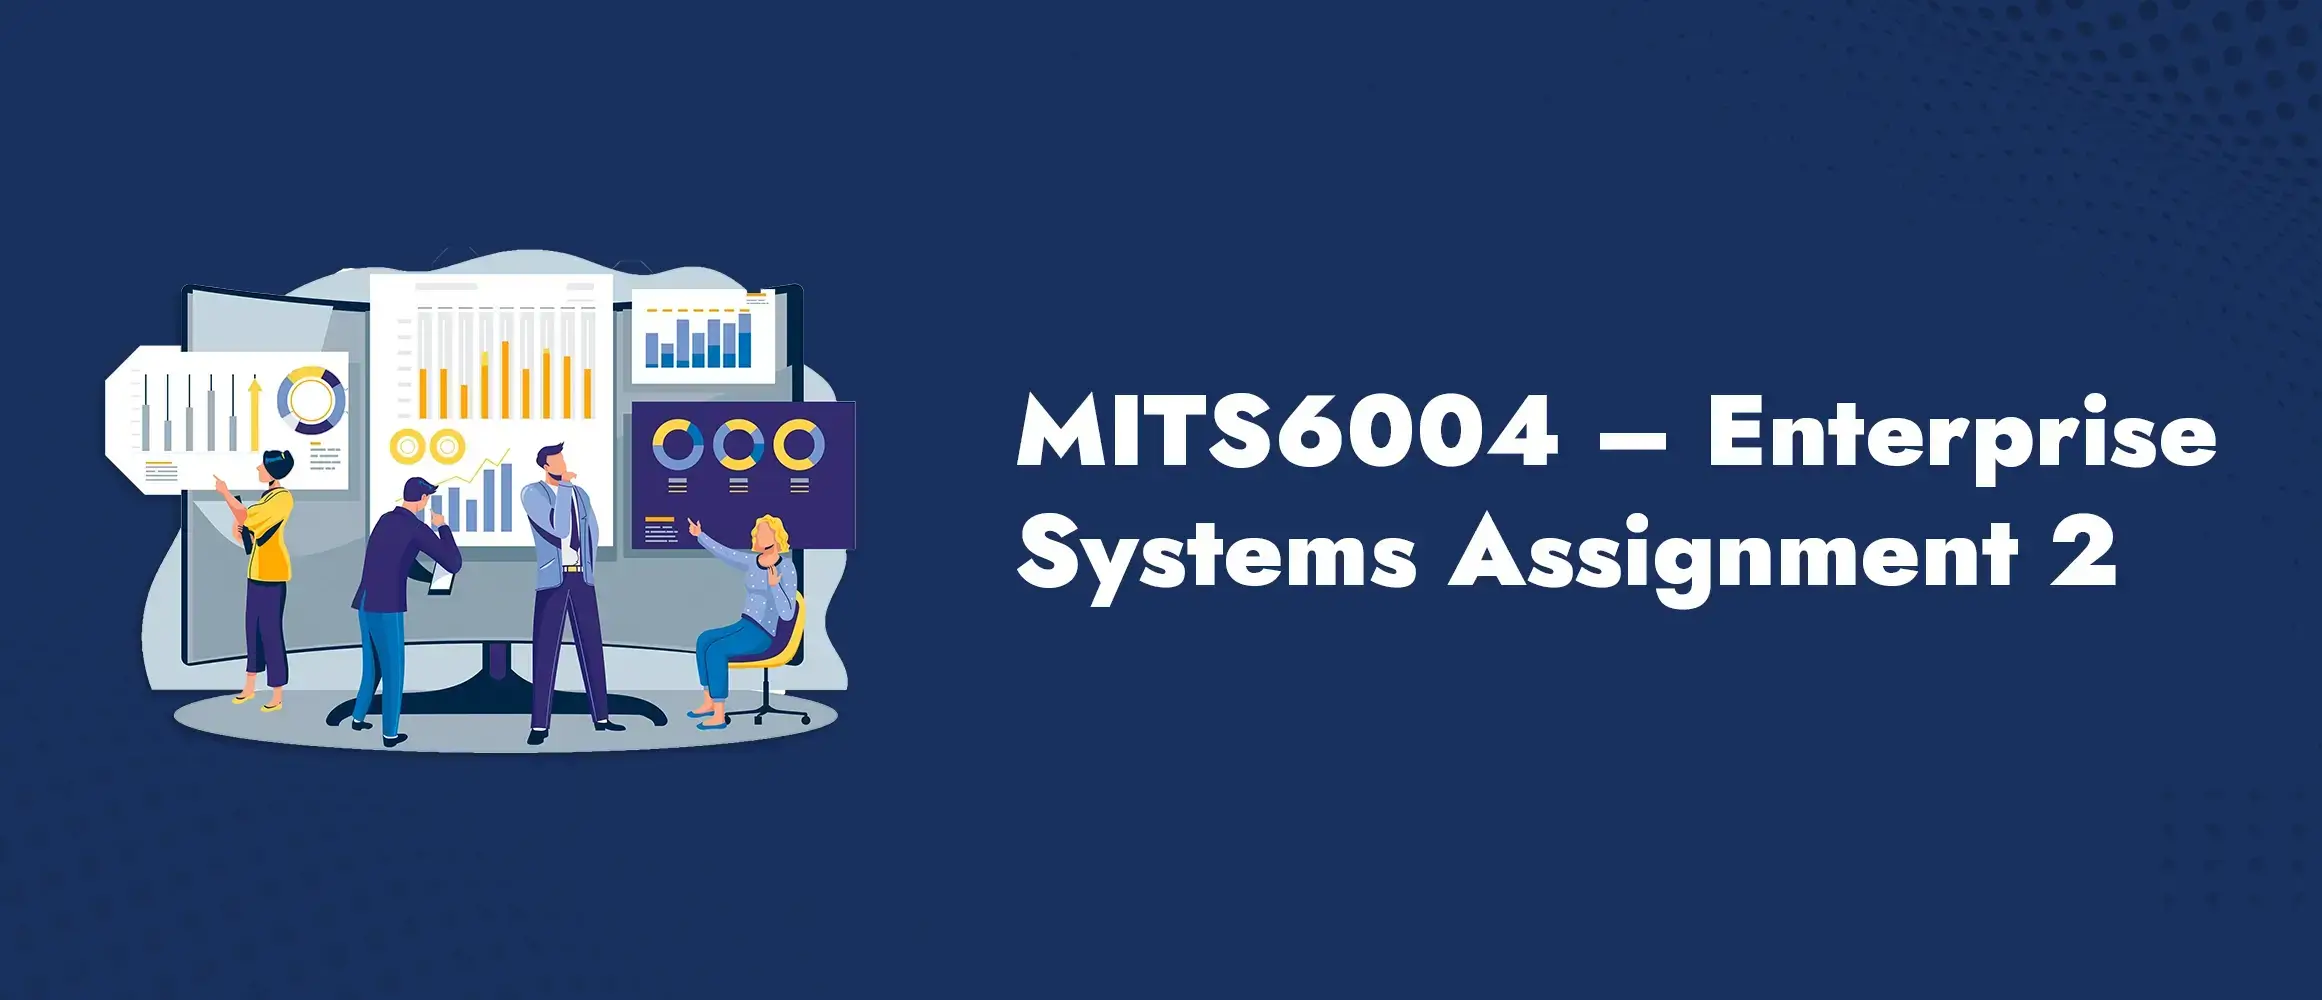 MITS6004 Enterprise System Assignment 2